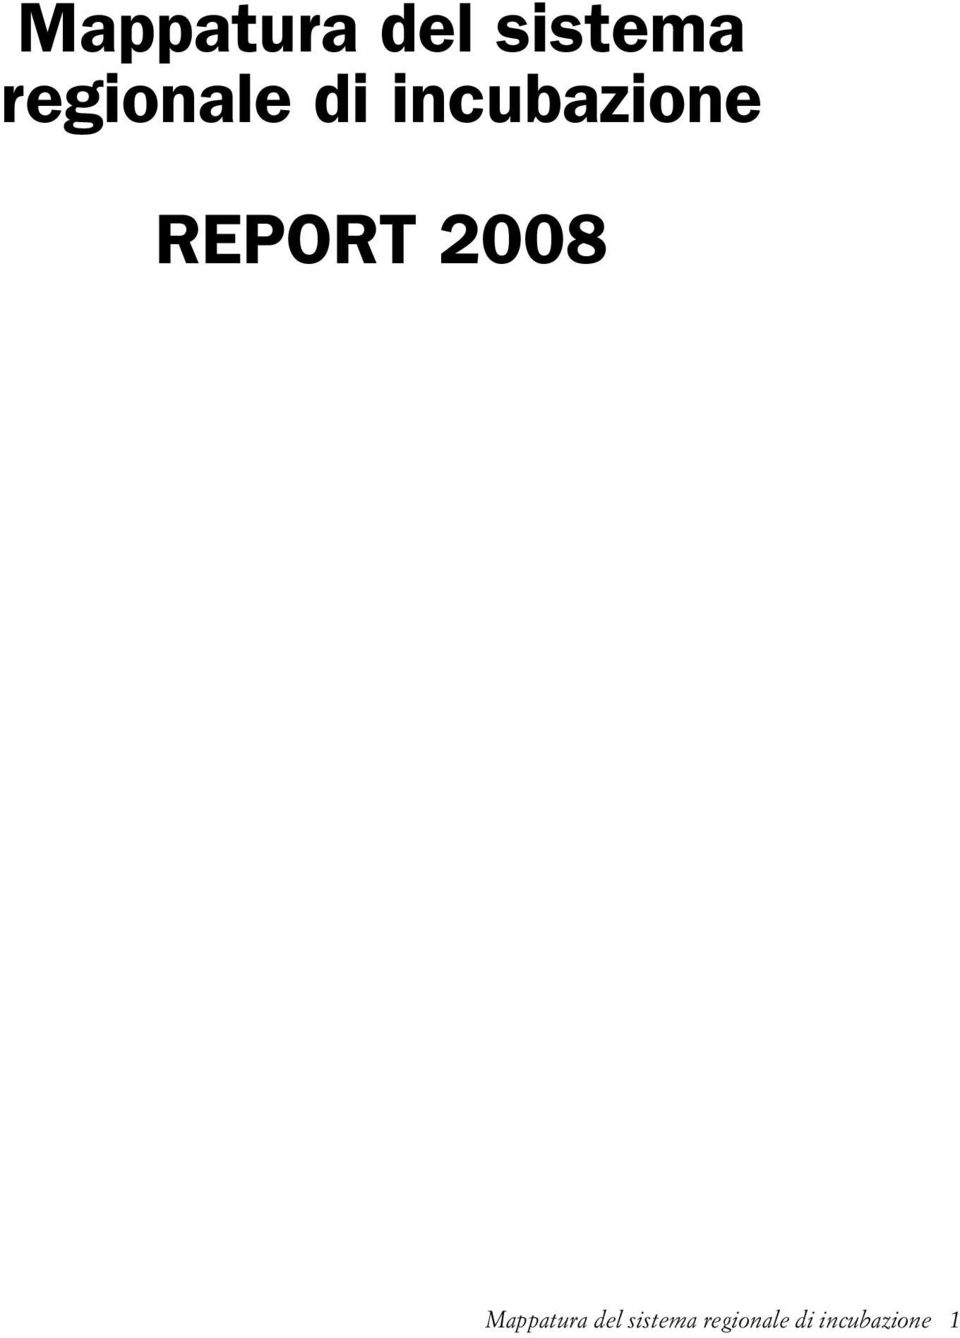 REPORT 2008   1